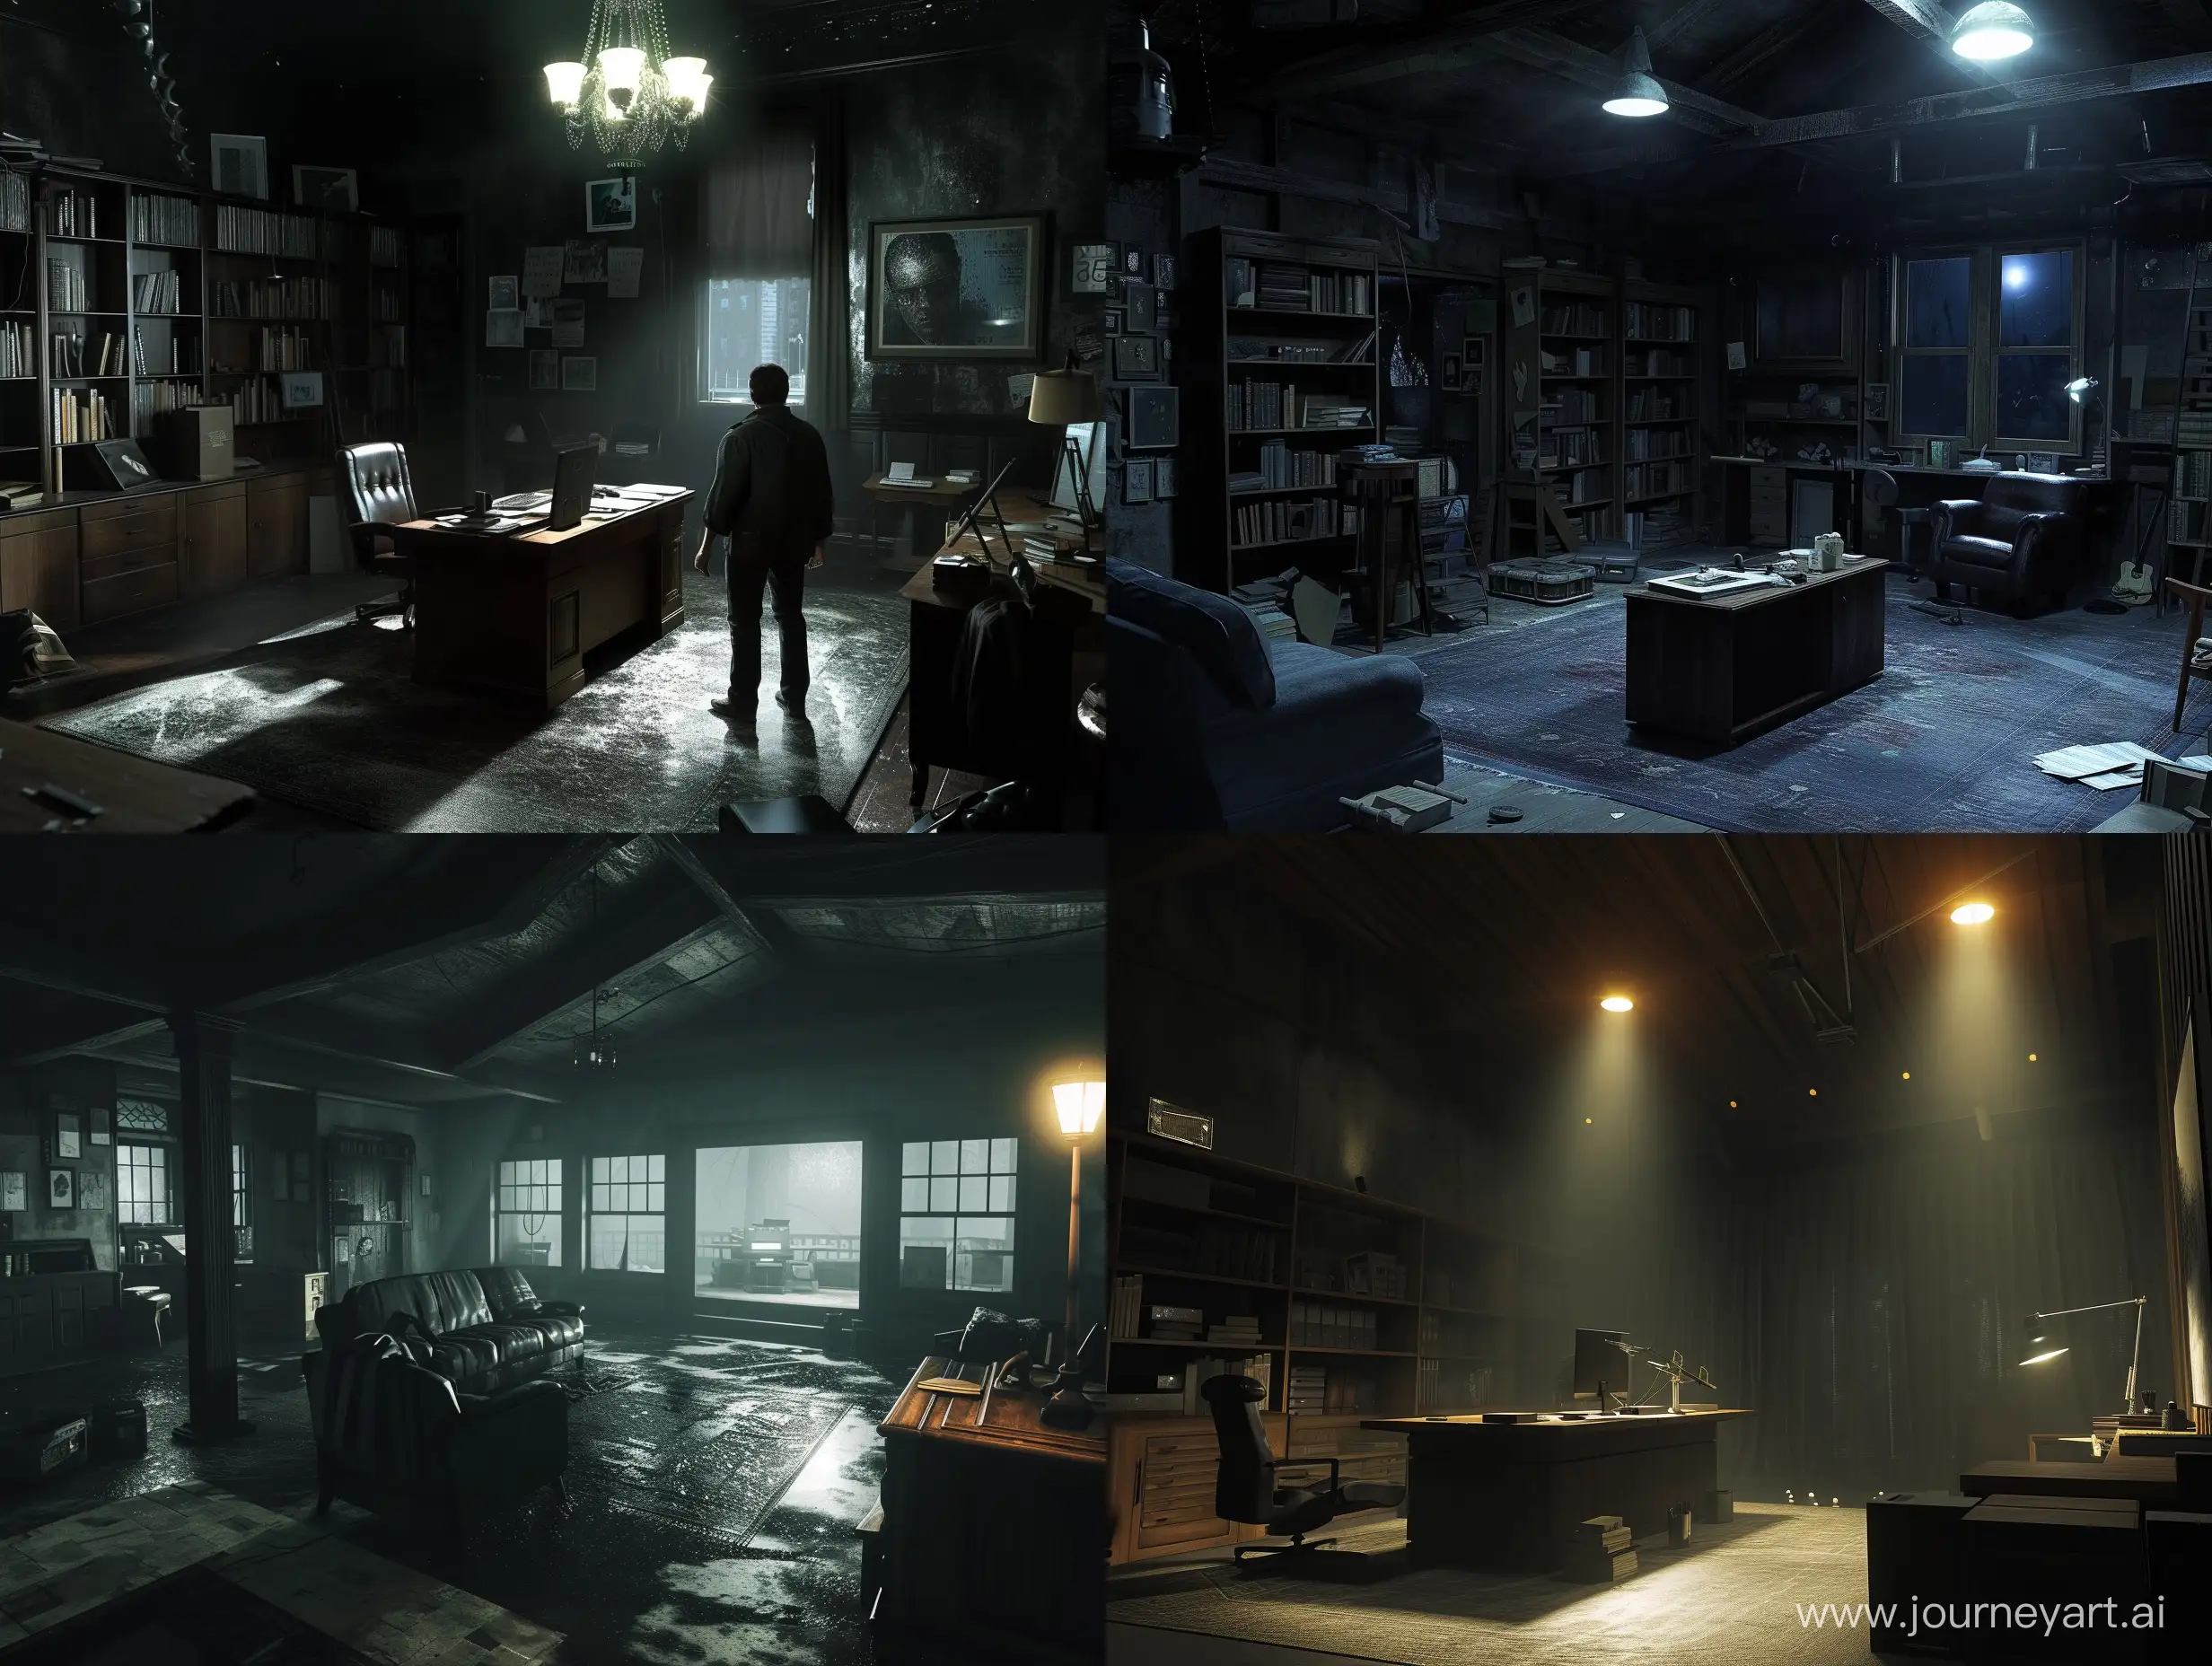 Alan-Wake-Writers-Room-Realistic-Depiction-with-Dark-Dramatic-Lighting